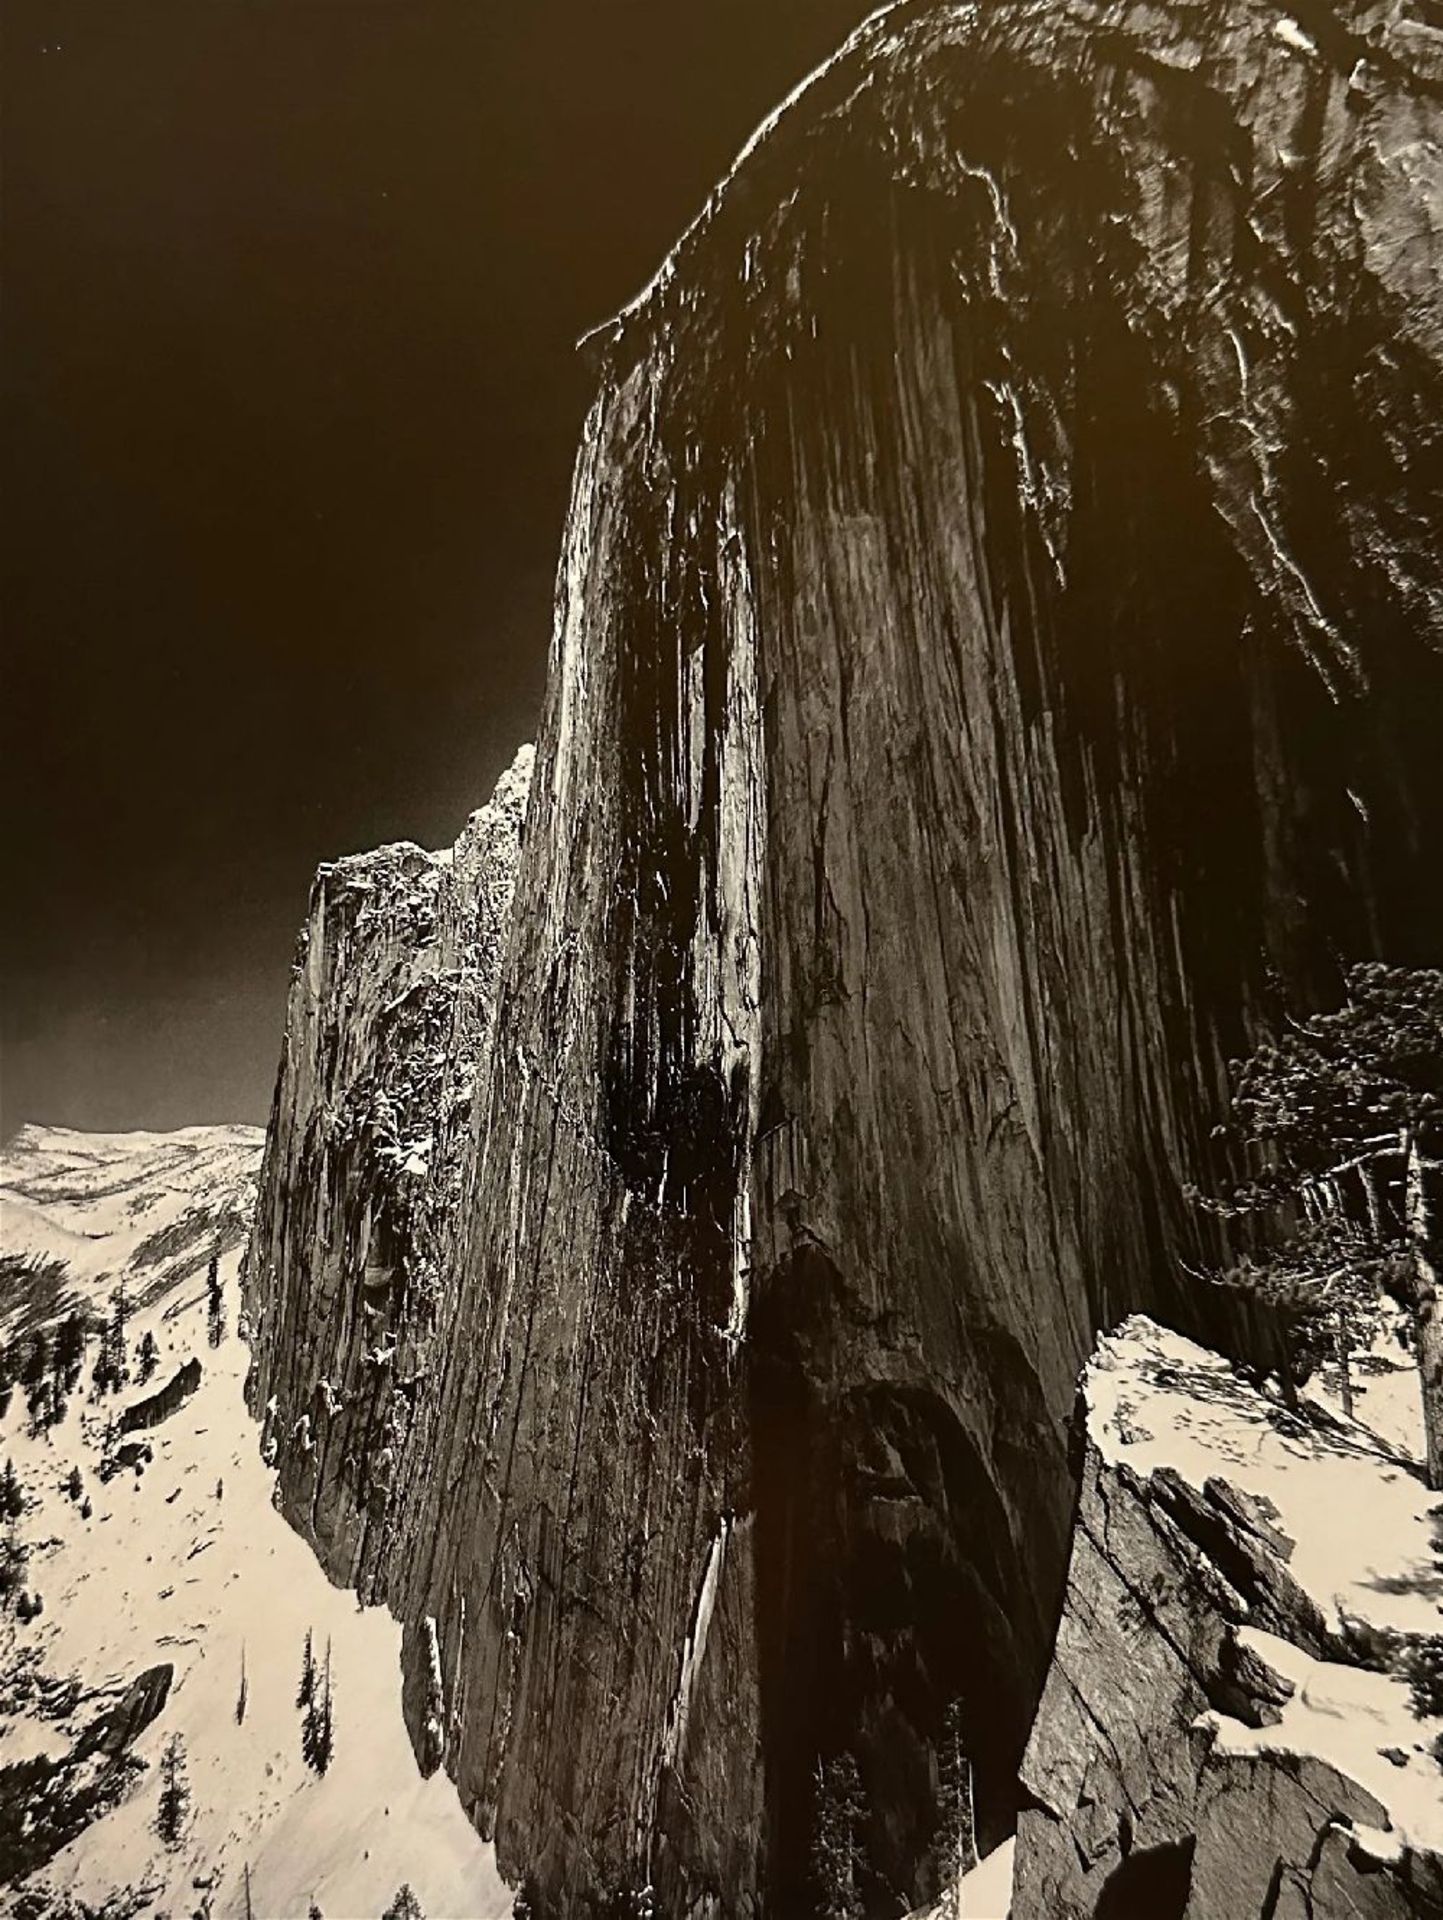 Ansel Adams "Monolith" Print